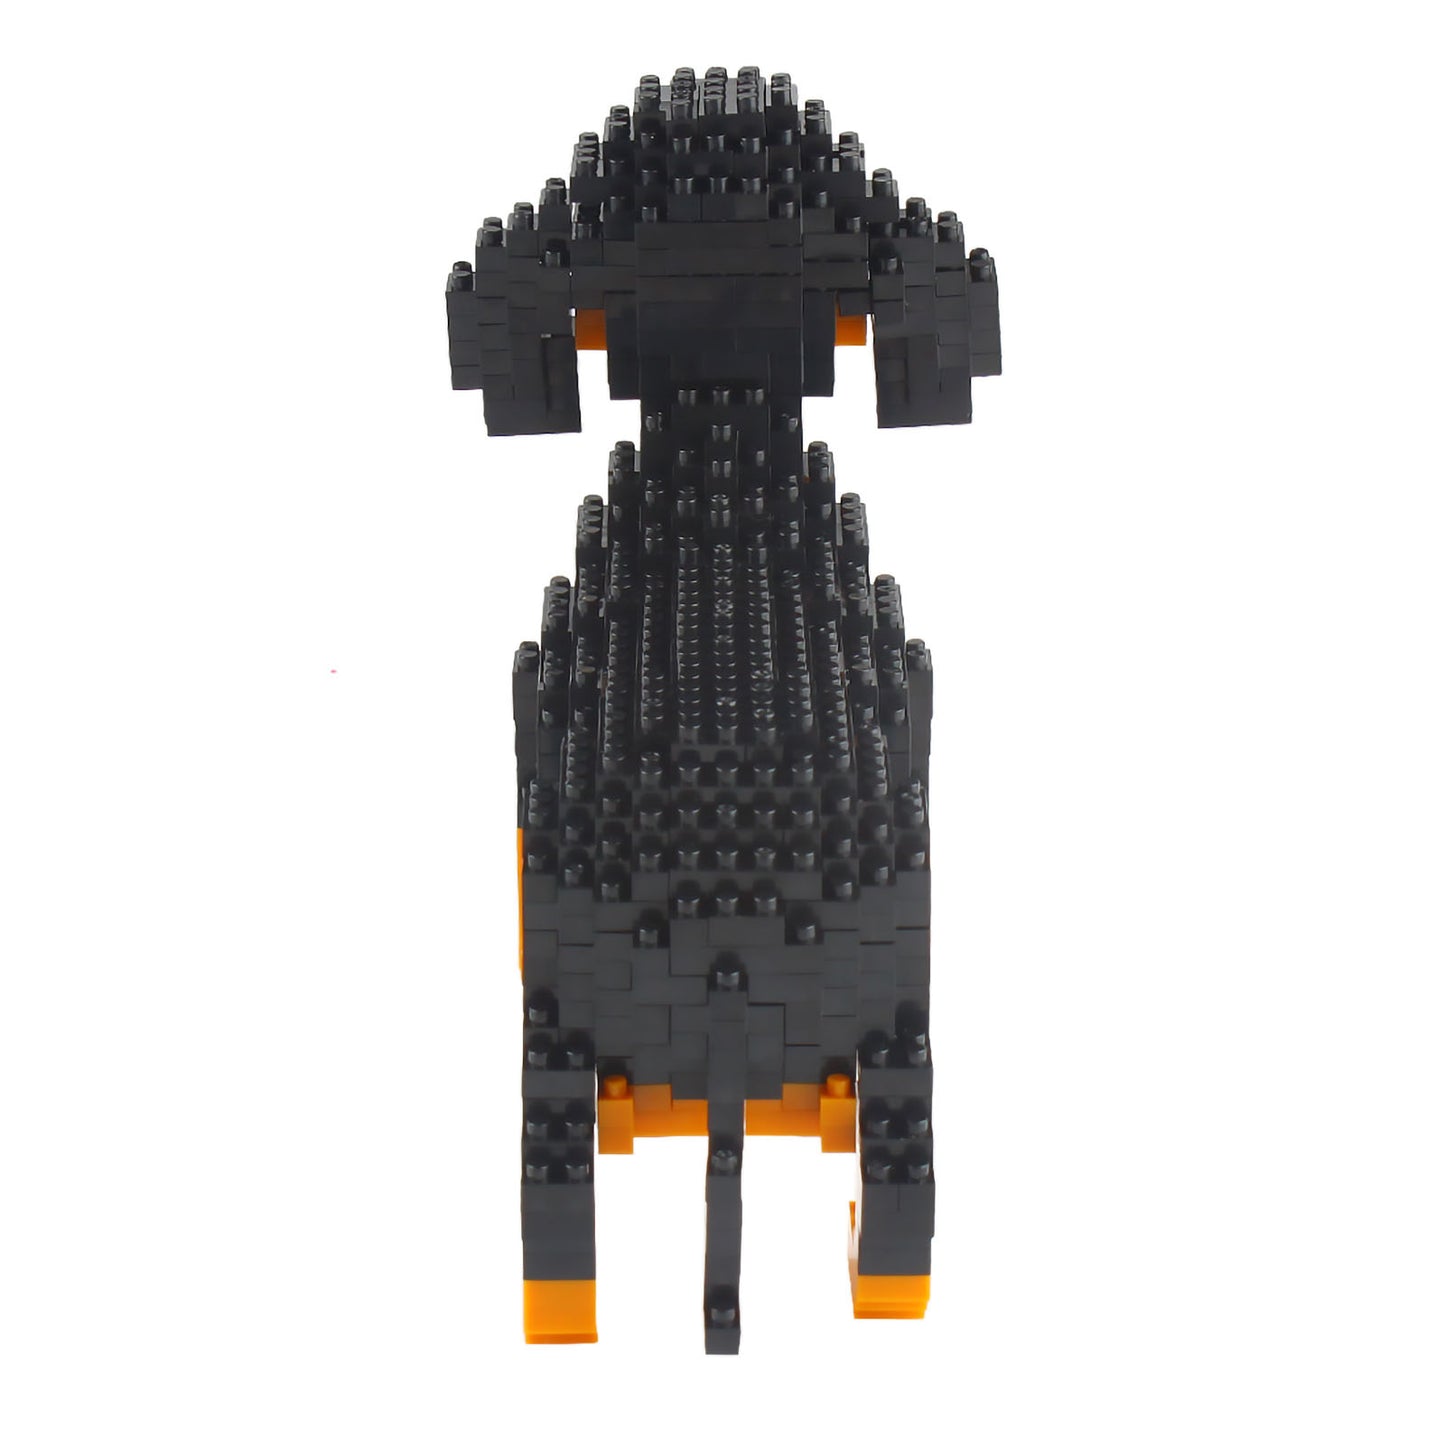 Larcele Dog Mini Building Toy Bricks, 898 Pieces KLJM-02 (Dachshund)